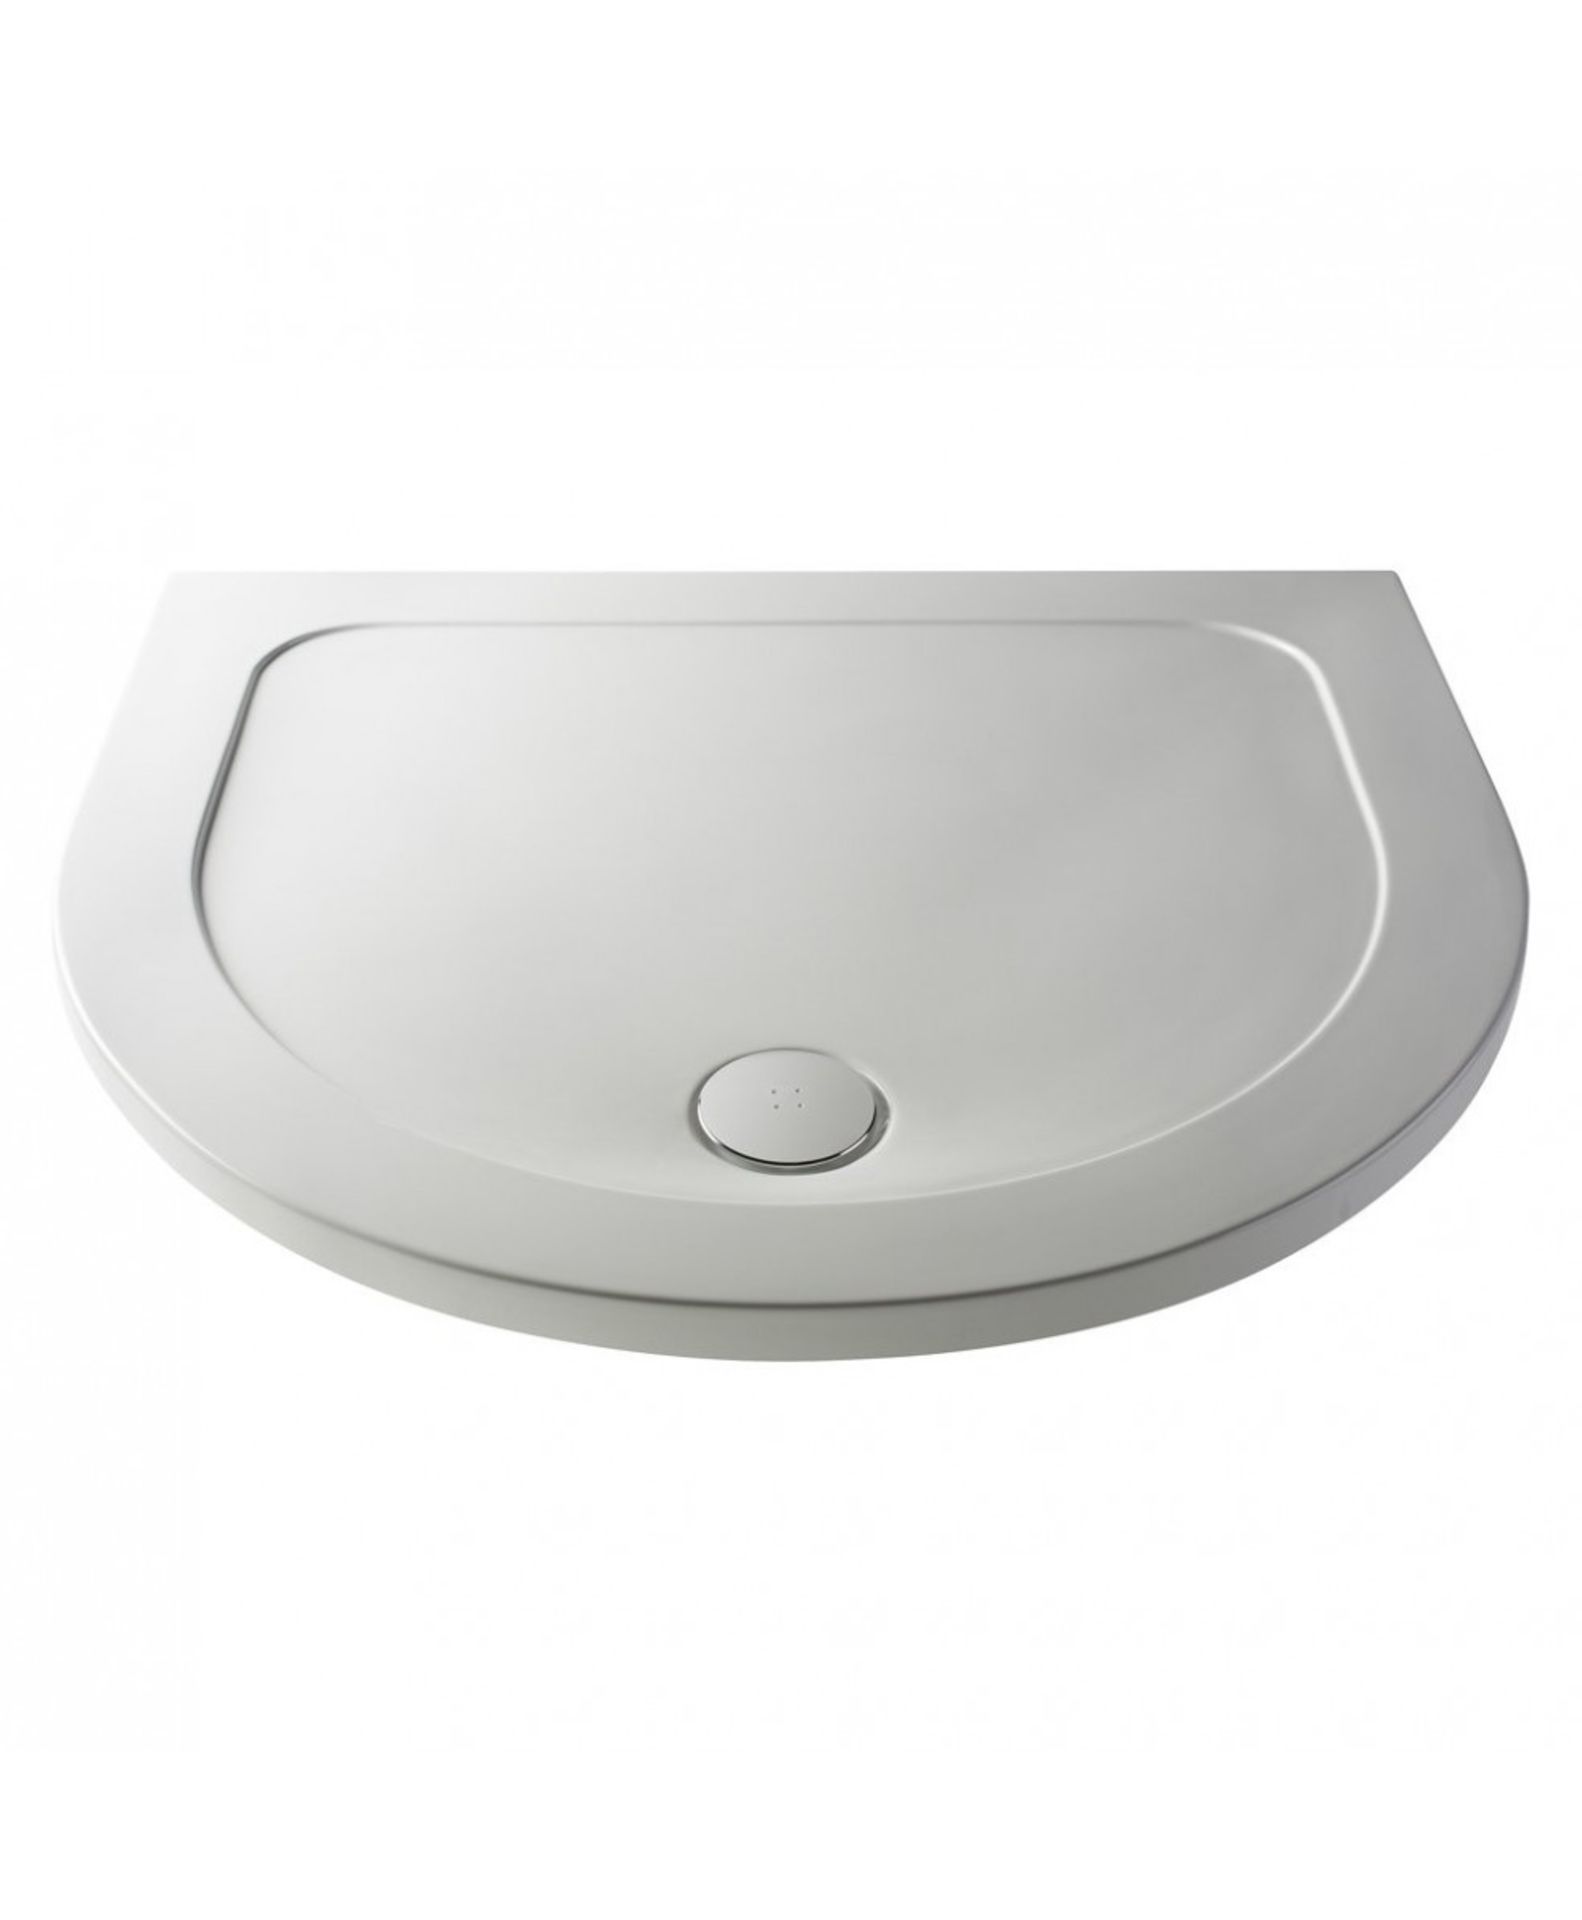 (PC41) Twyfords 770mm Hydro D Shape White Shower tray.Low profile ultra slim design Gel coated ...